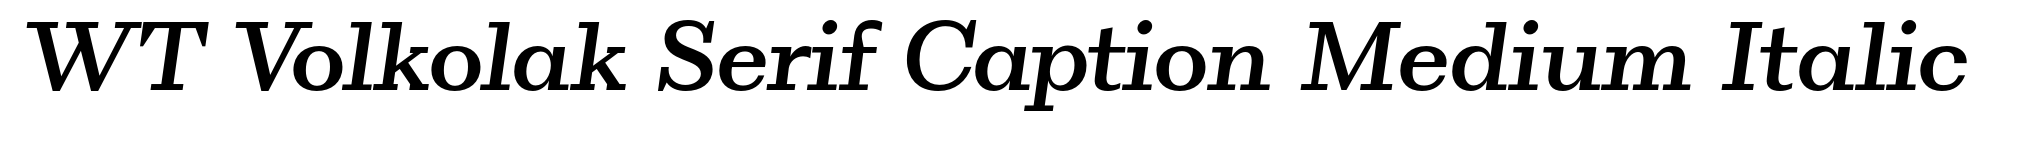 WT Volkolak Serif Caption Medium Italic image